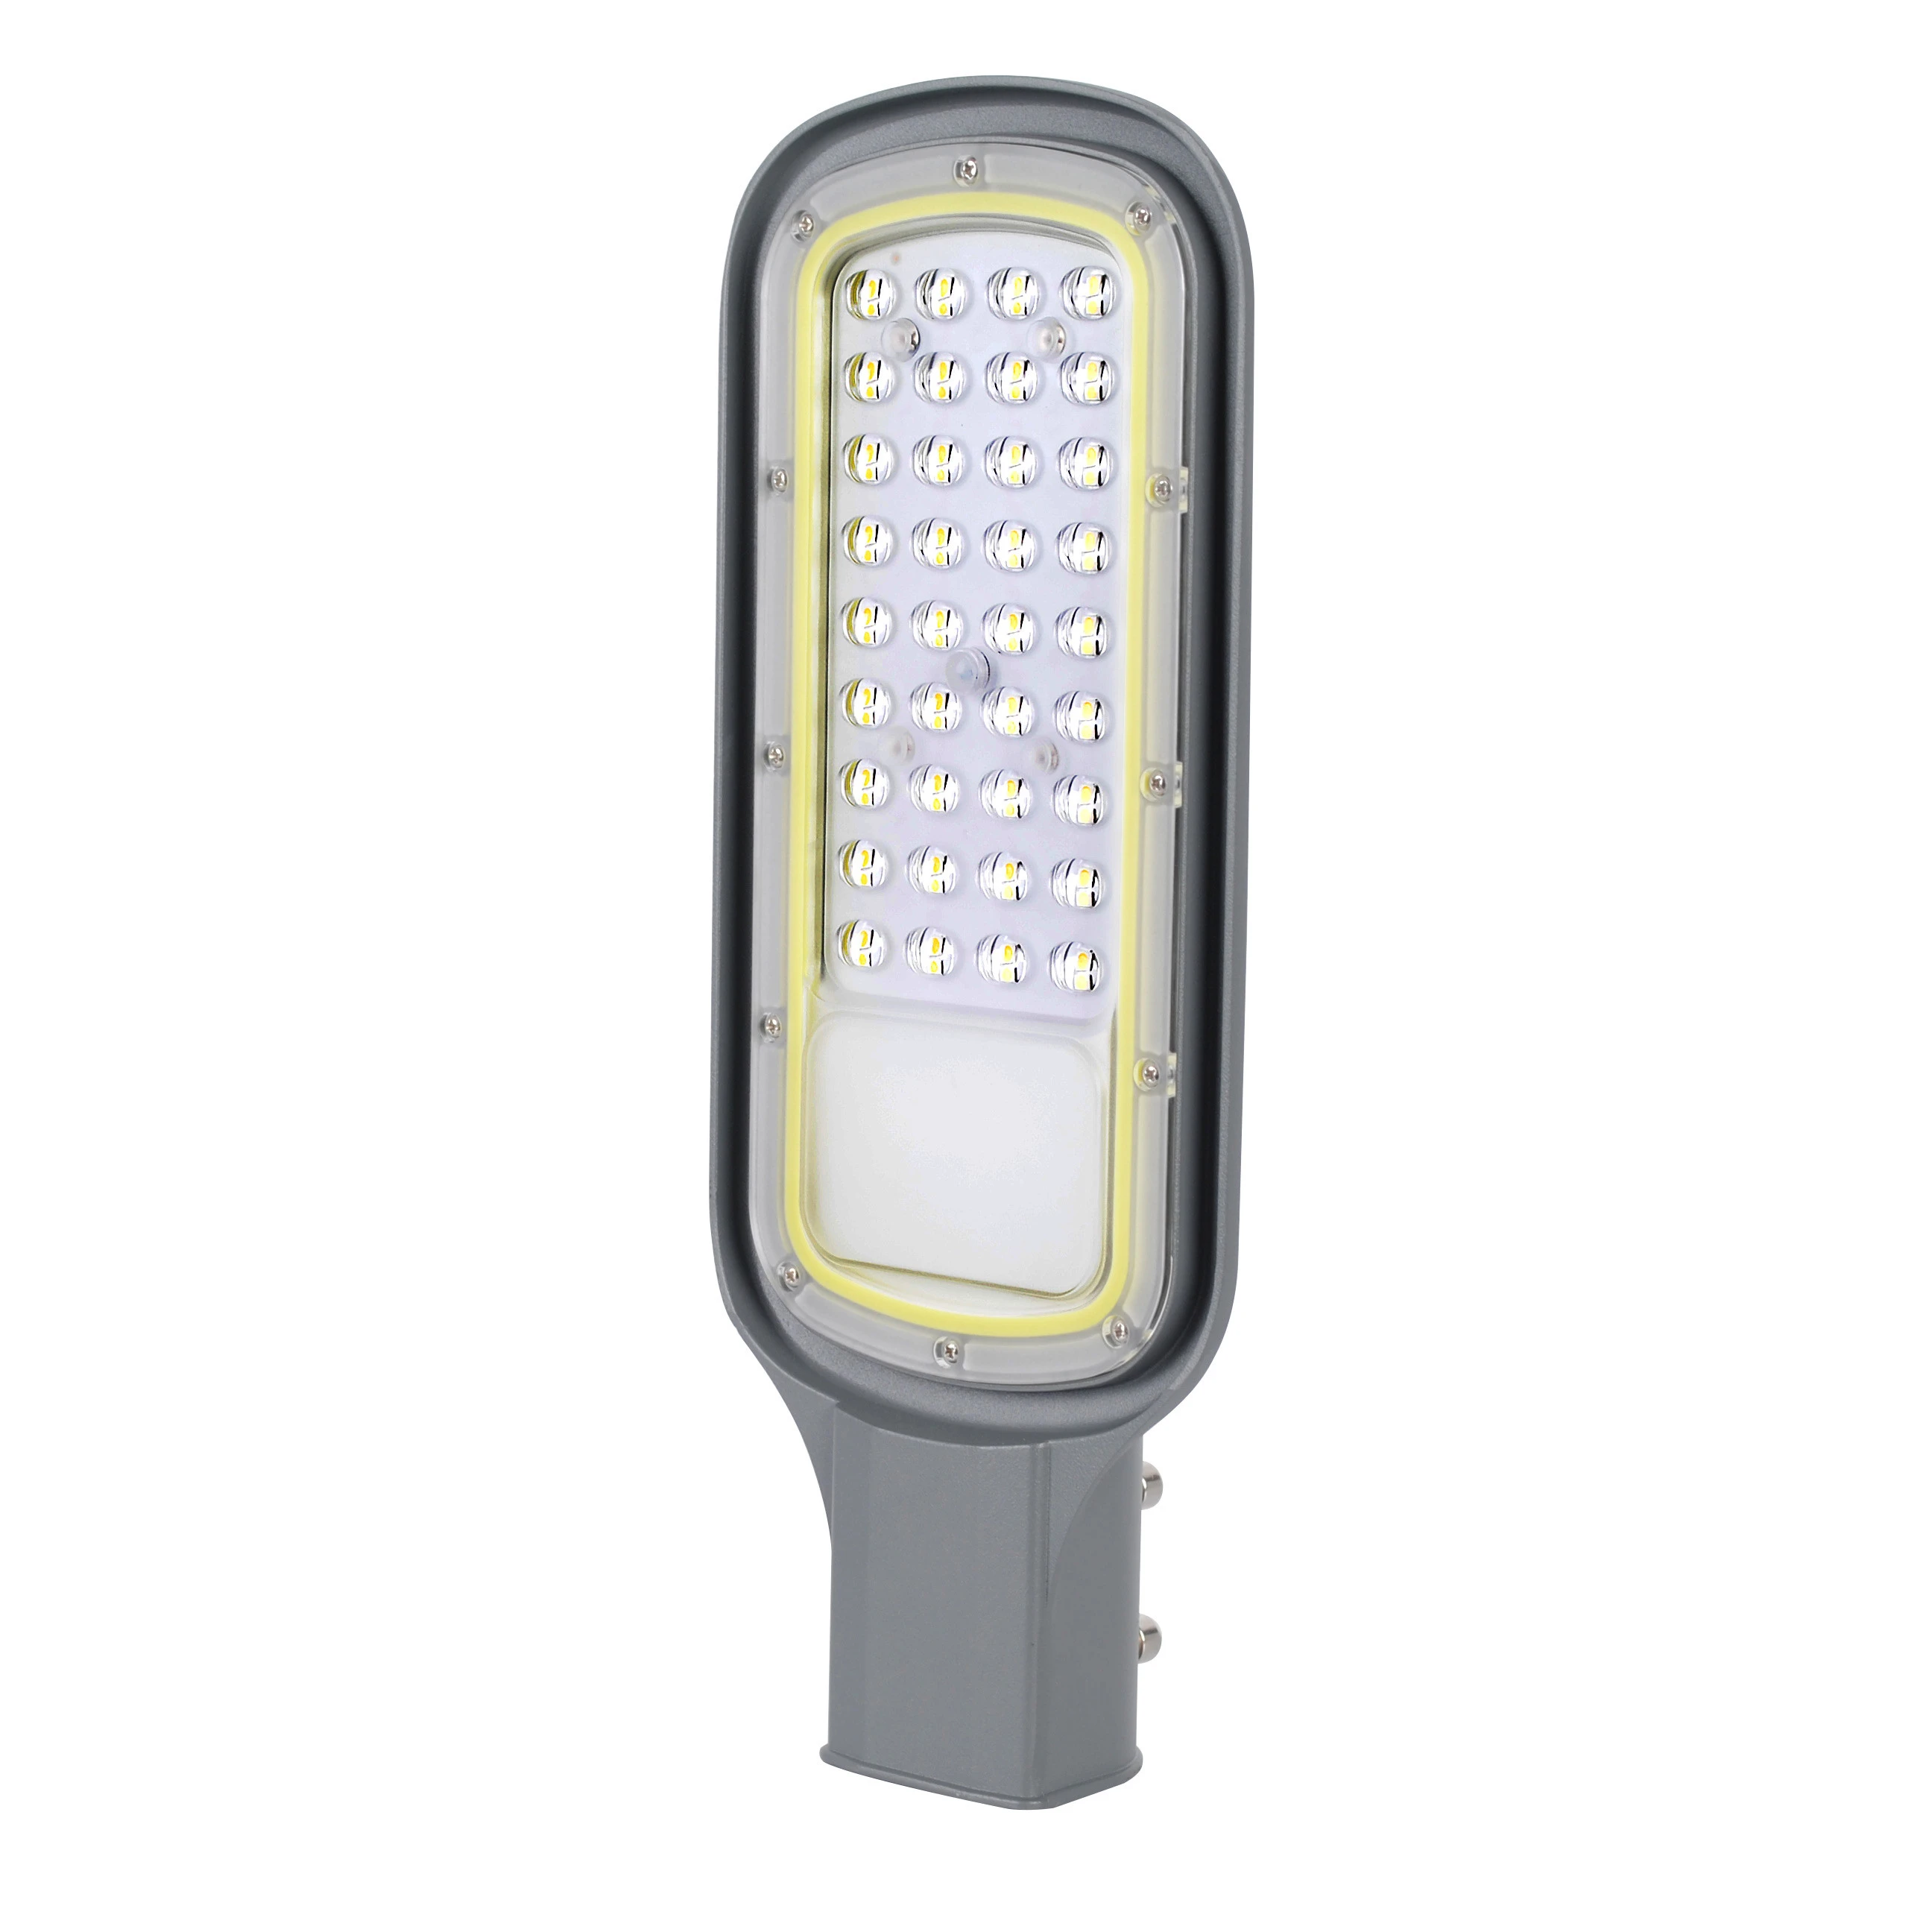 50W 4500 lumen cheap price street light for outdoor road lighting